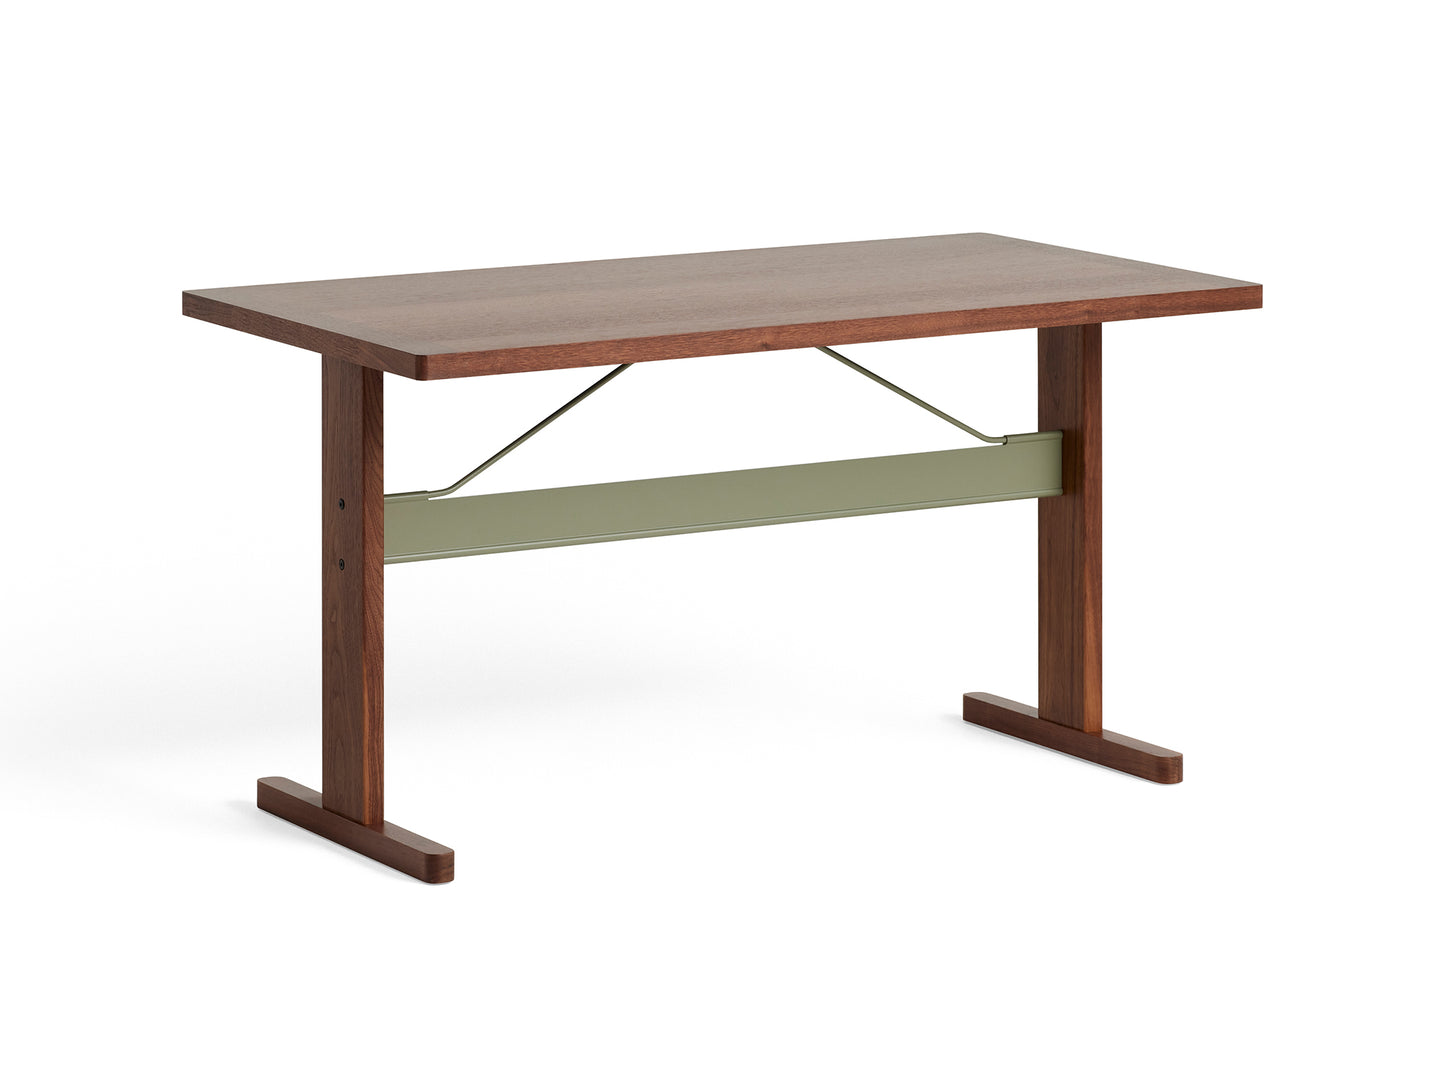 Passerelle テーブル (木製天板)